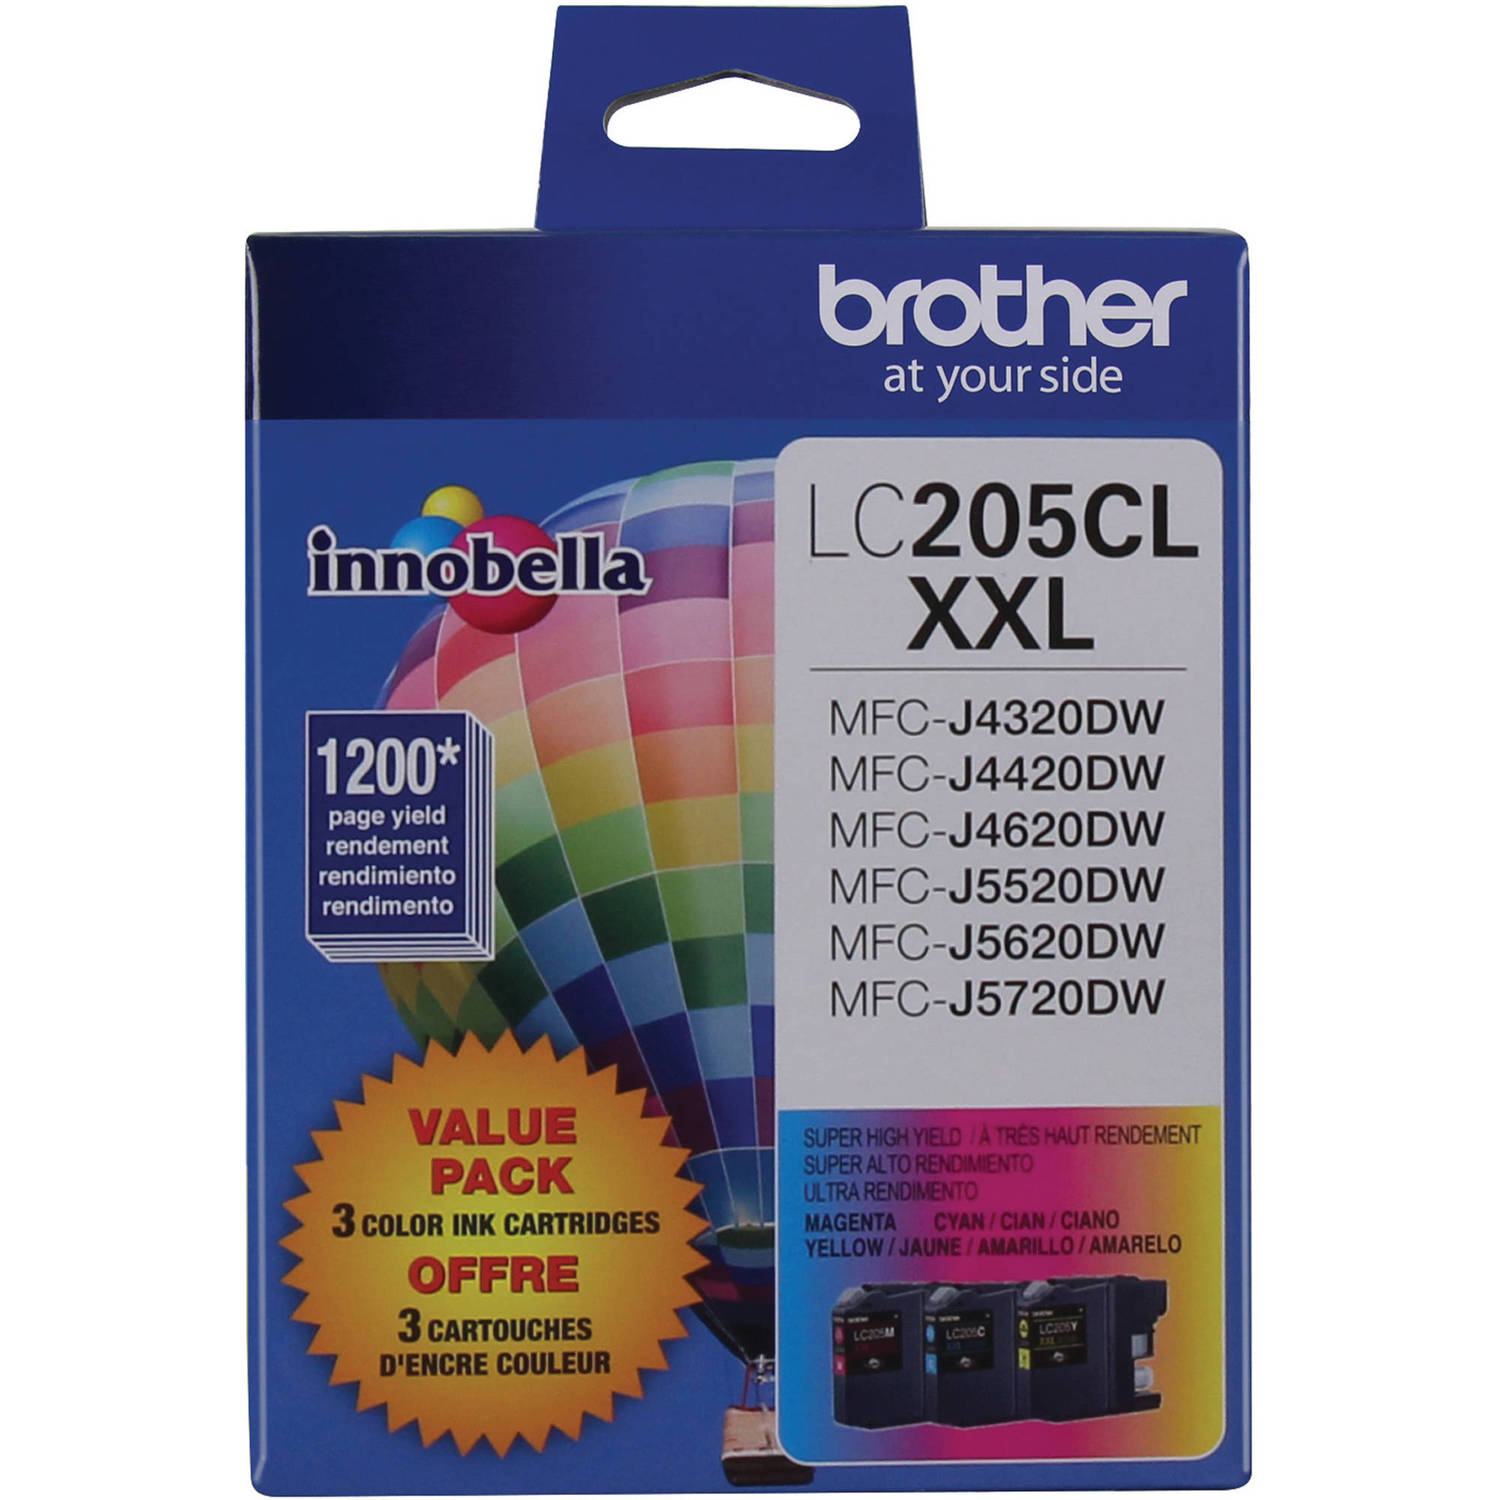 Set de Cartuchos de Tinta Brother Lc2053Pks Innobella Super High Yield Xxl Series de 3 Colores